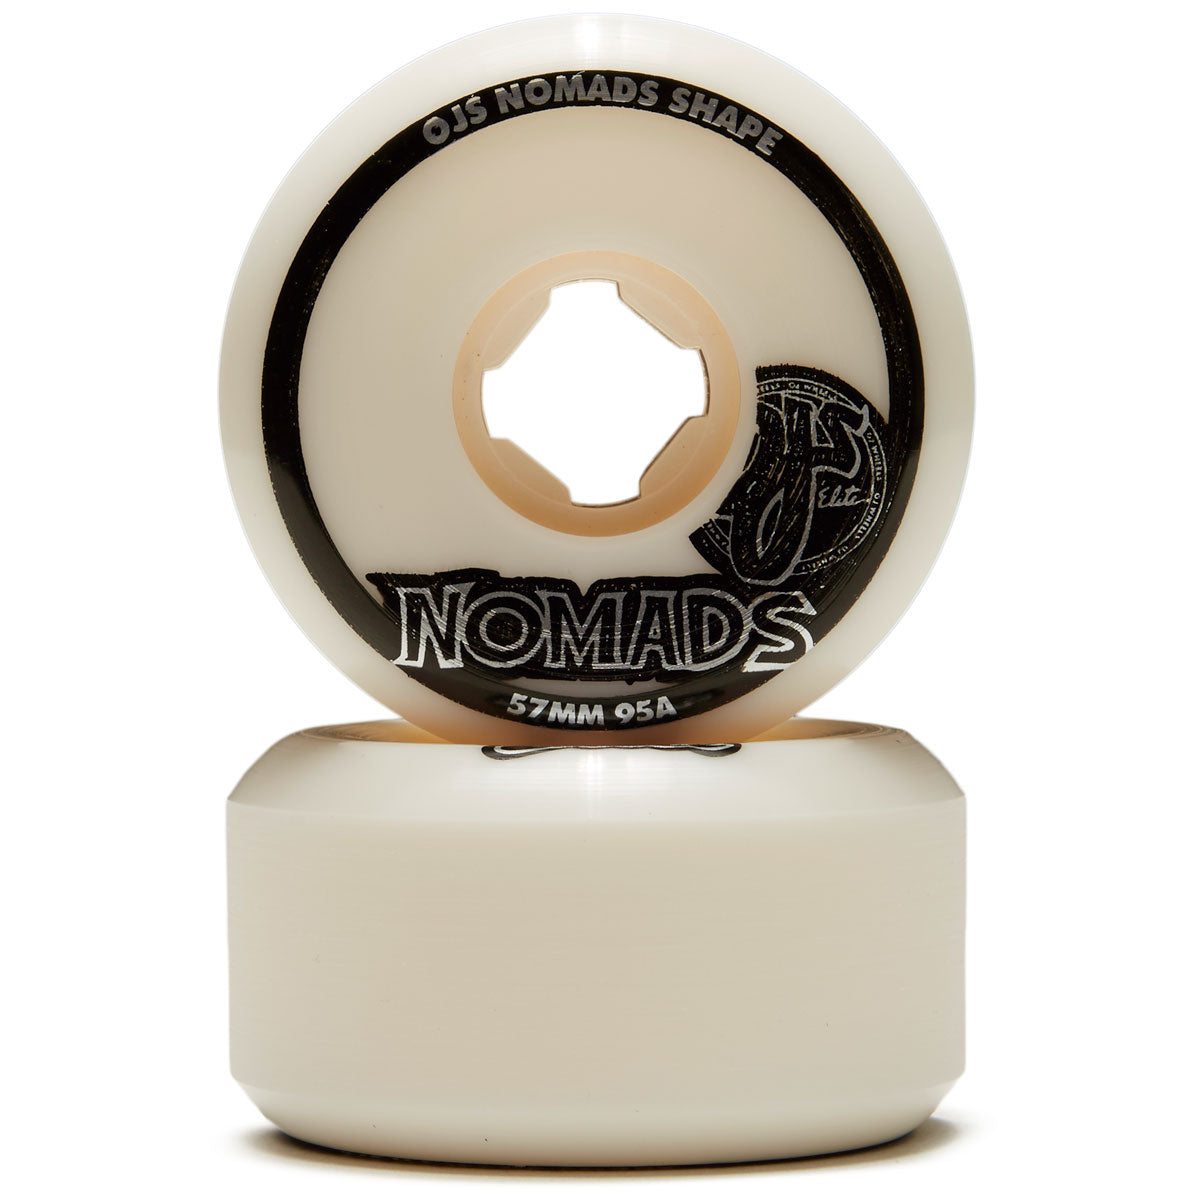 OJ Elite Nomads 95a Skateboard Wheels - White - 57mm image 2